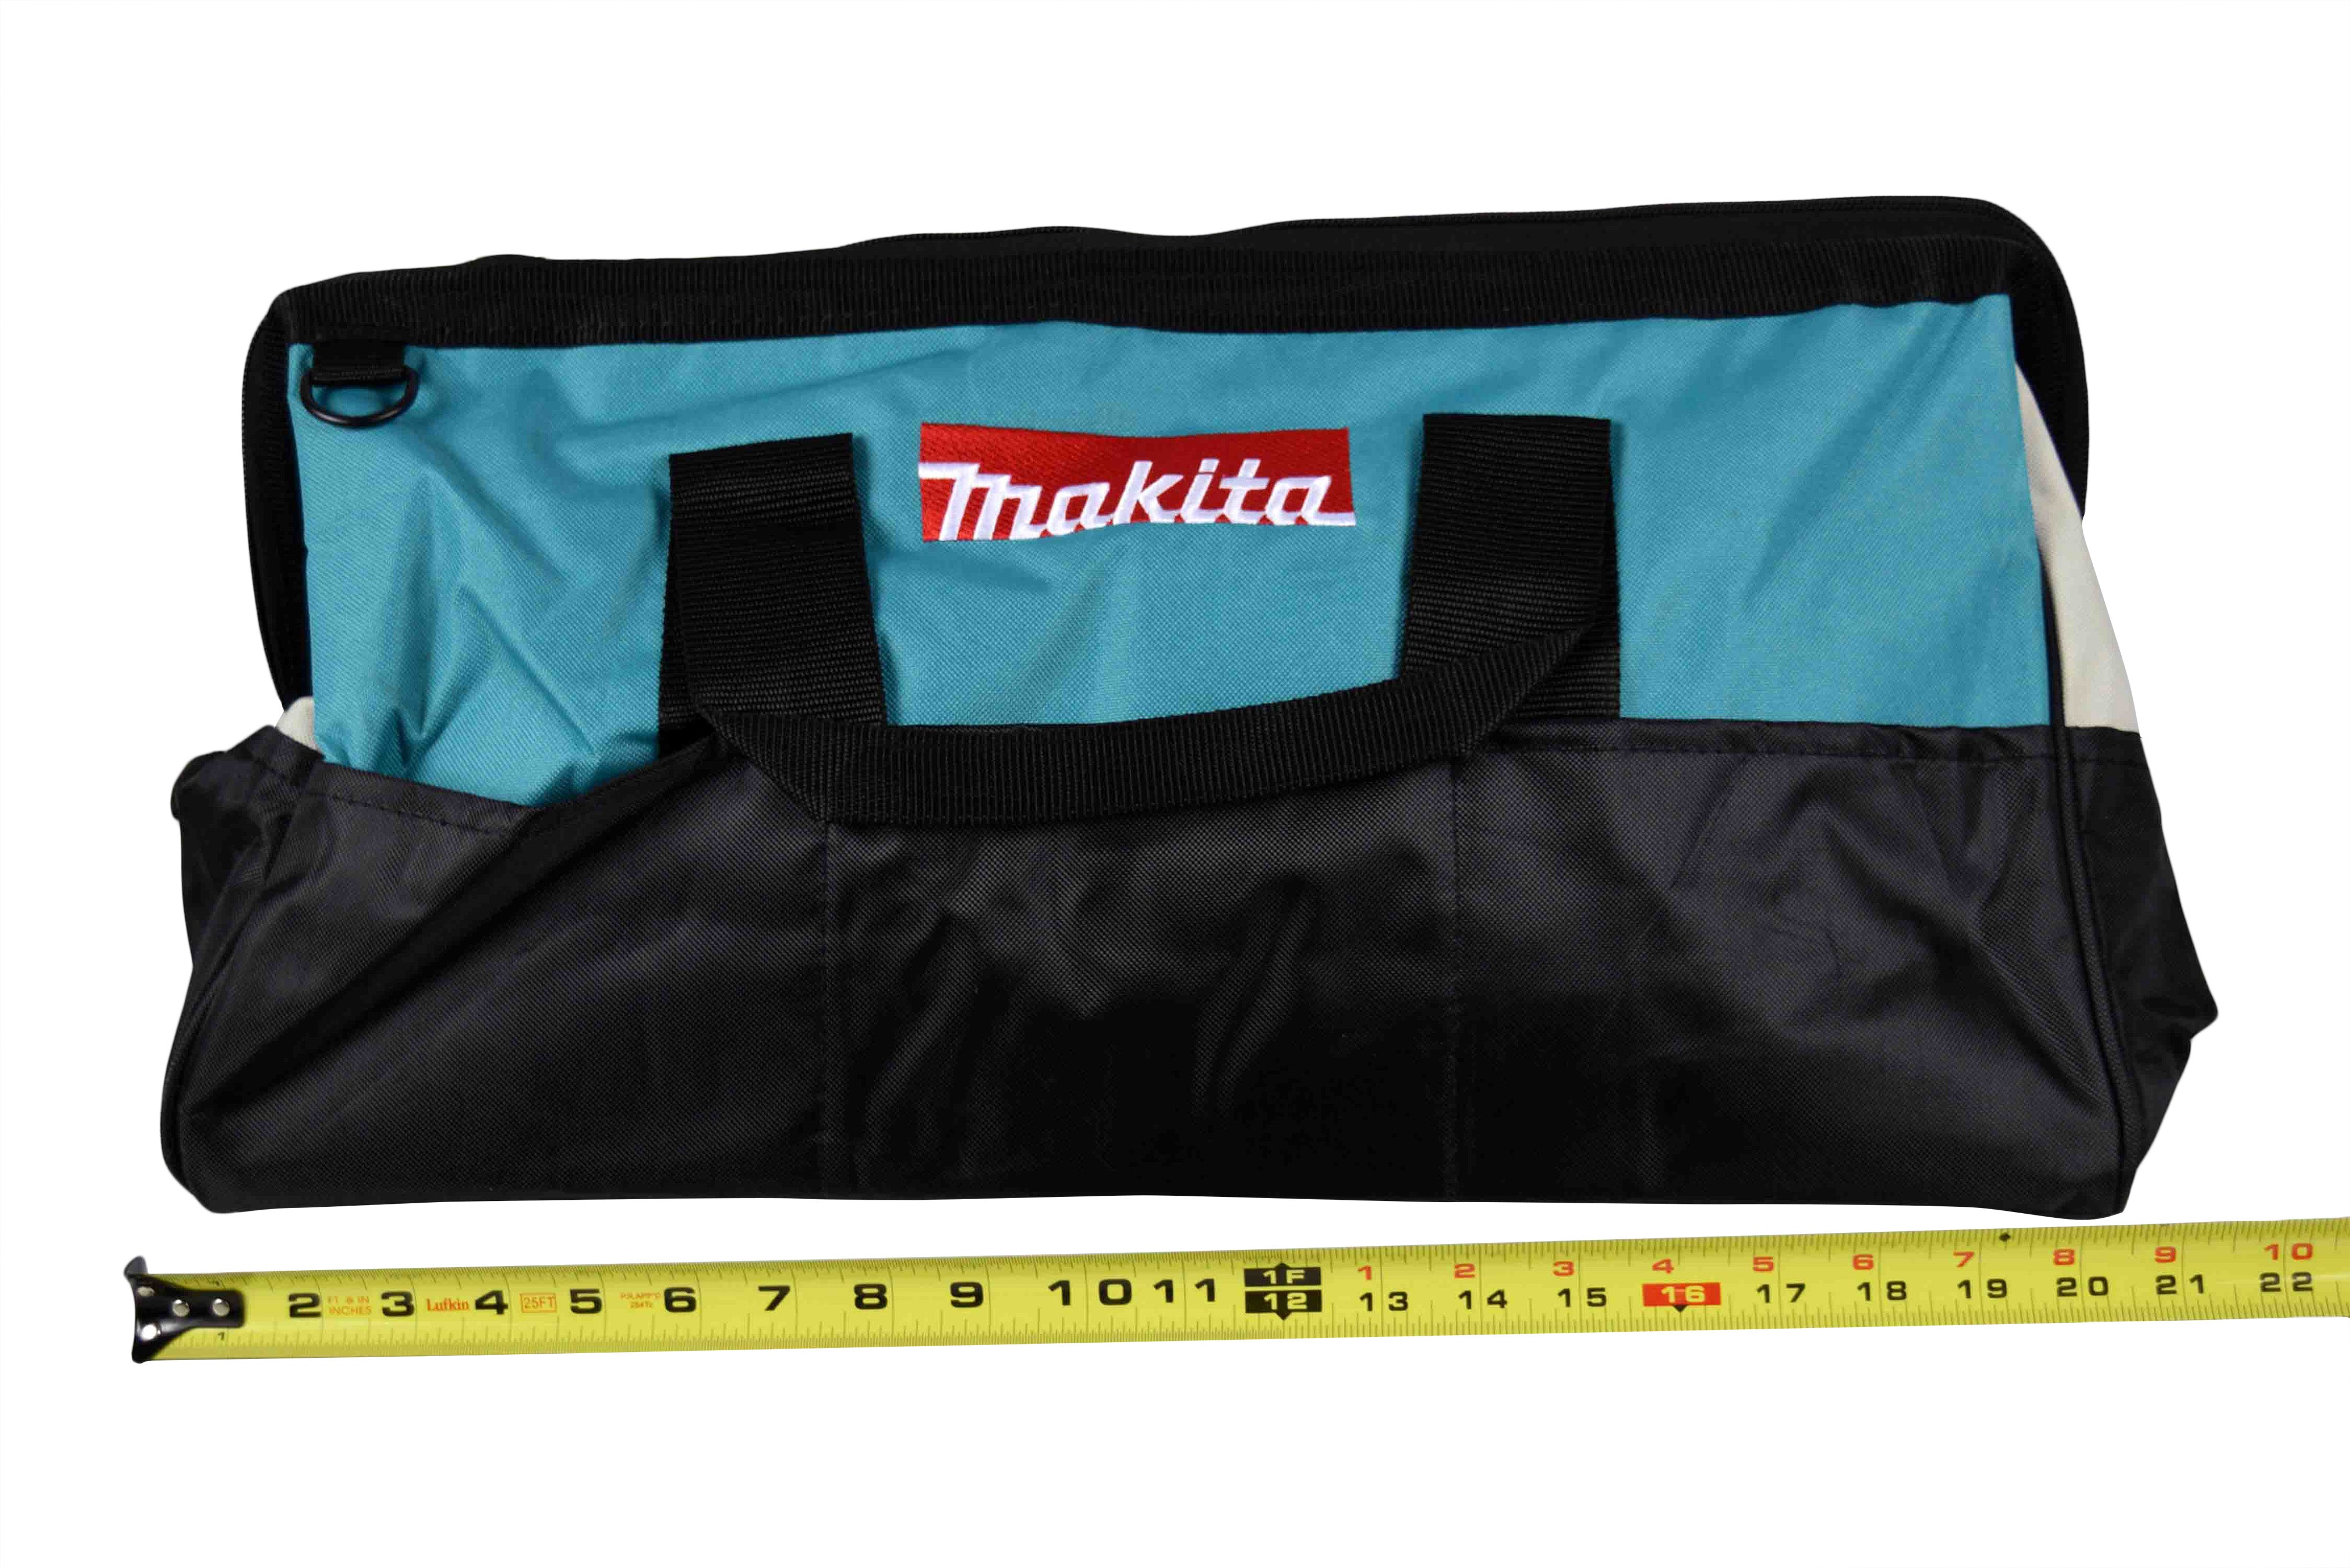 Makita 21 Inch Contractor Tool Bag